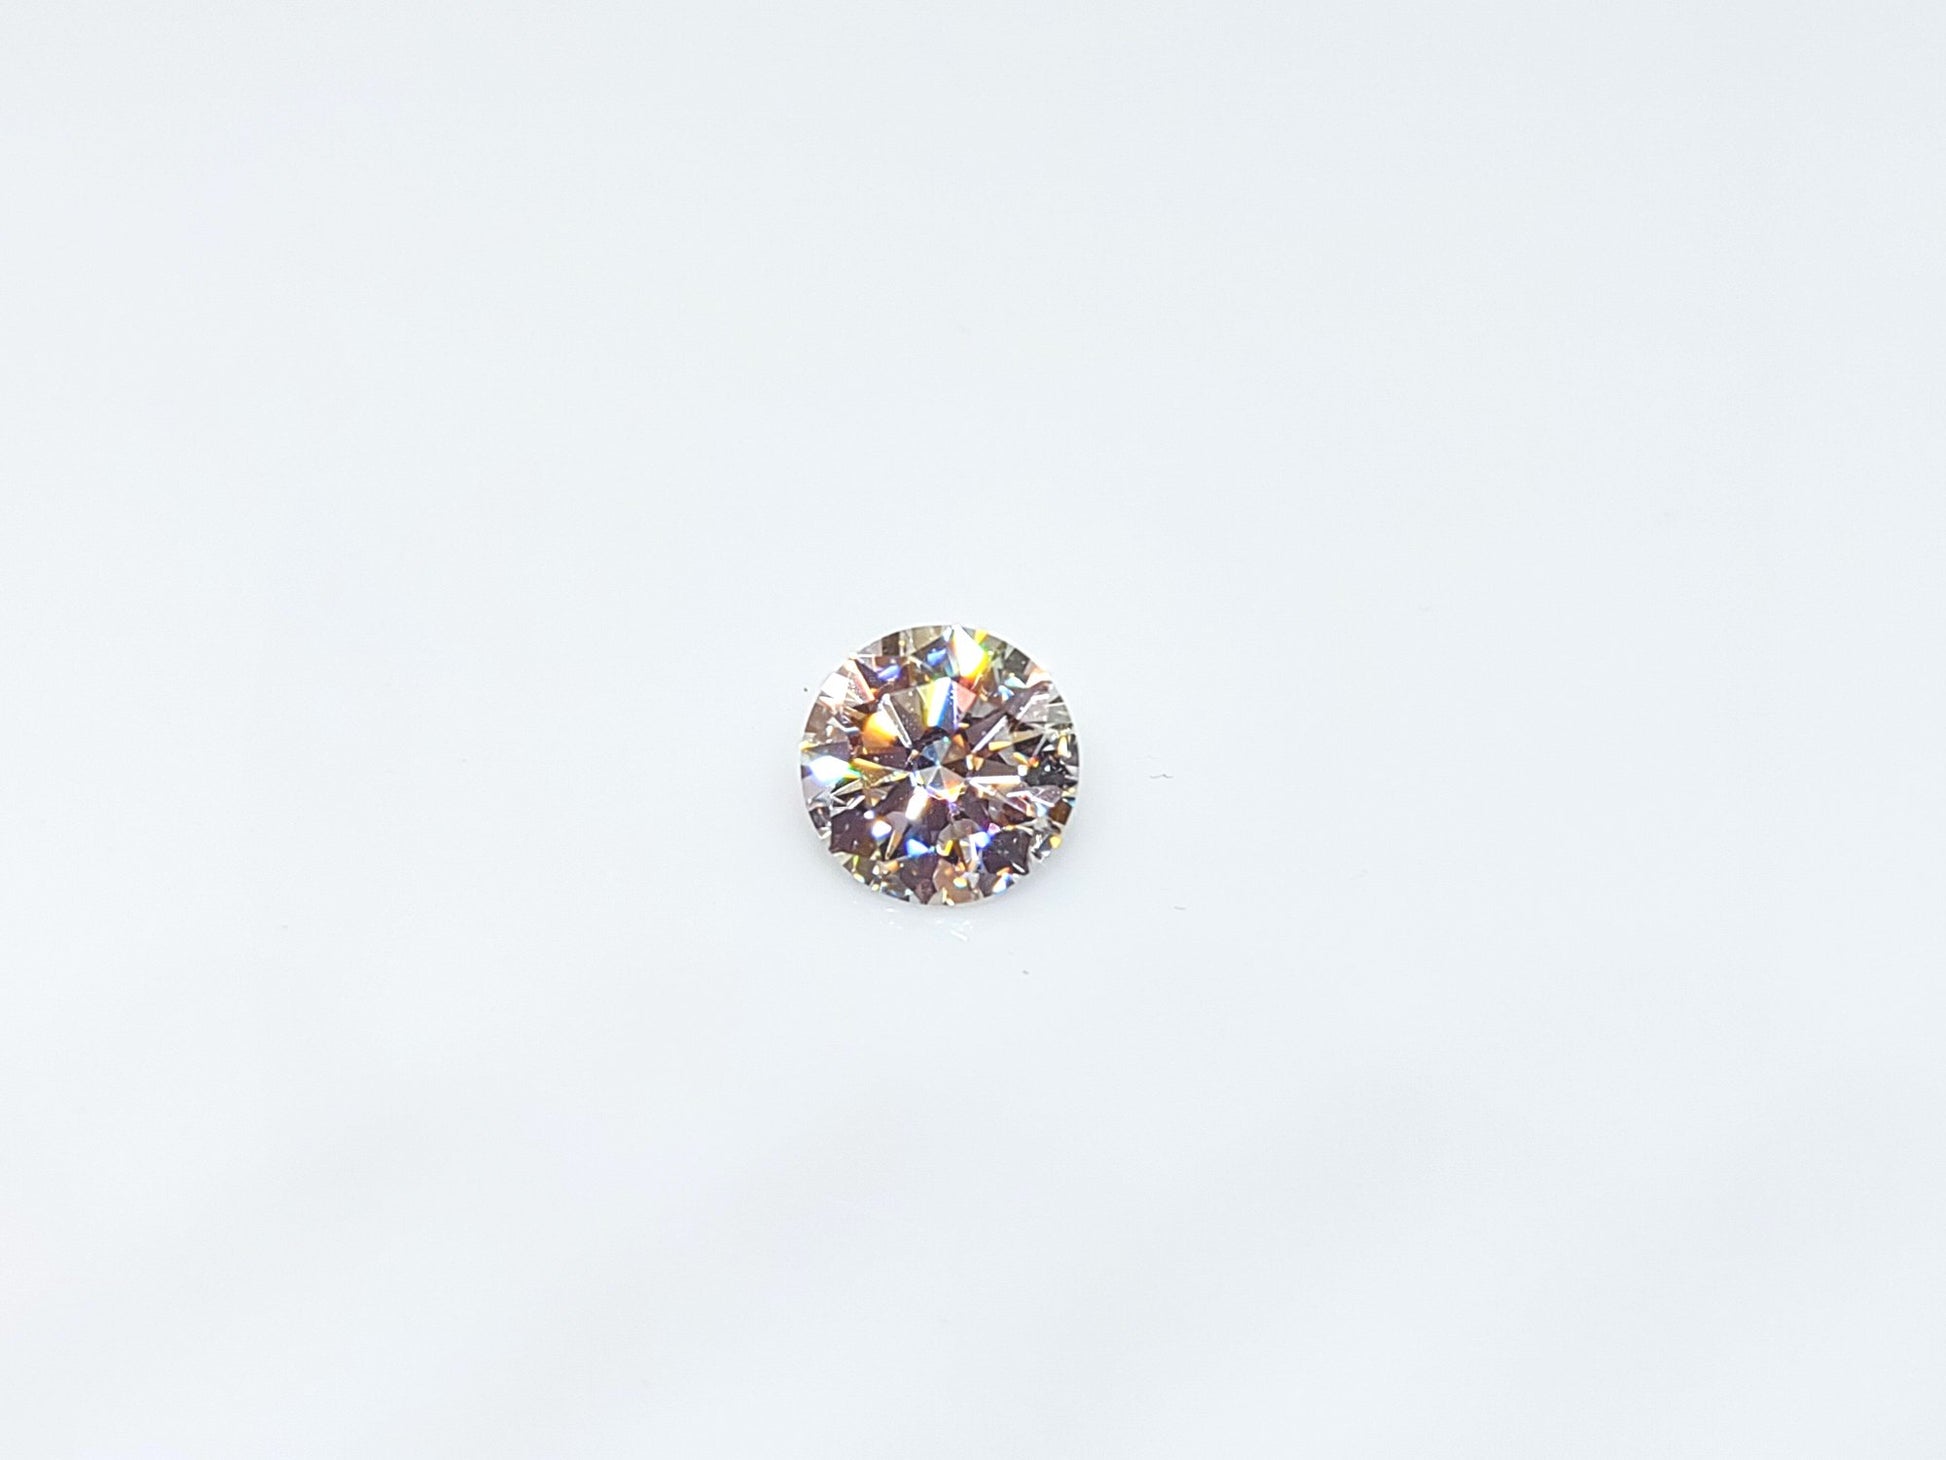 A round brilliant cut moissanite gem.